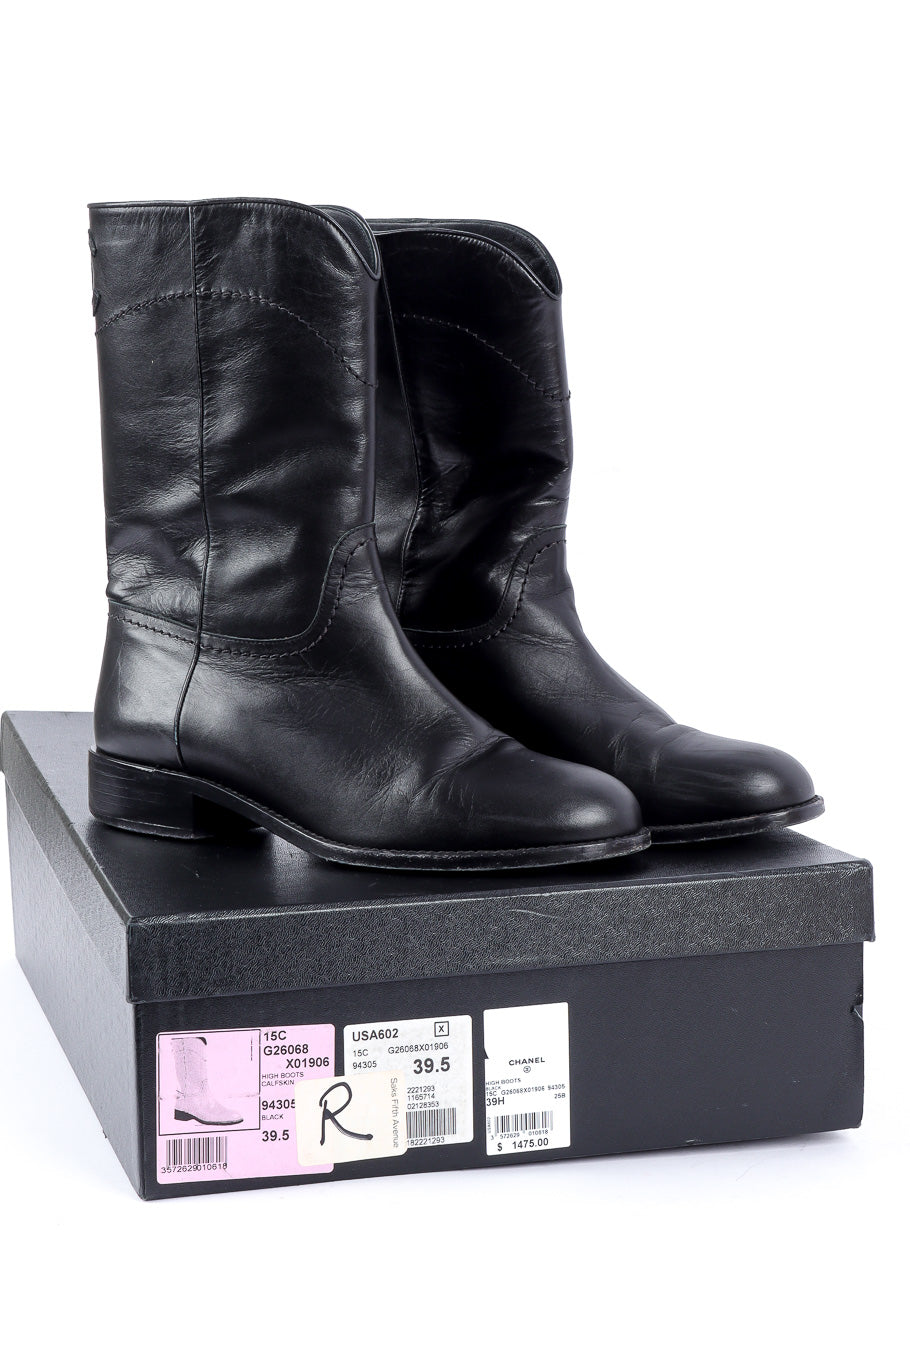 Chanel interlocking CC mid-calf boots and original box @recessla